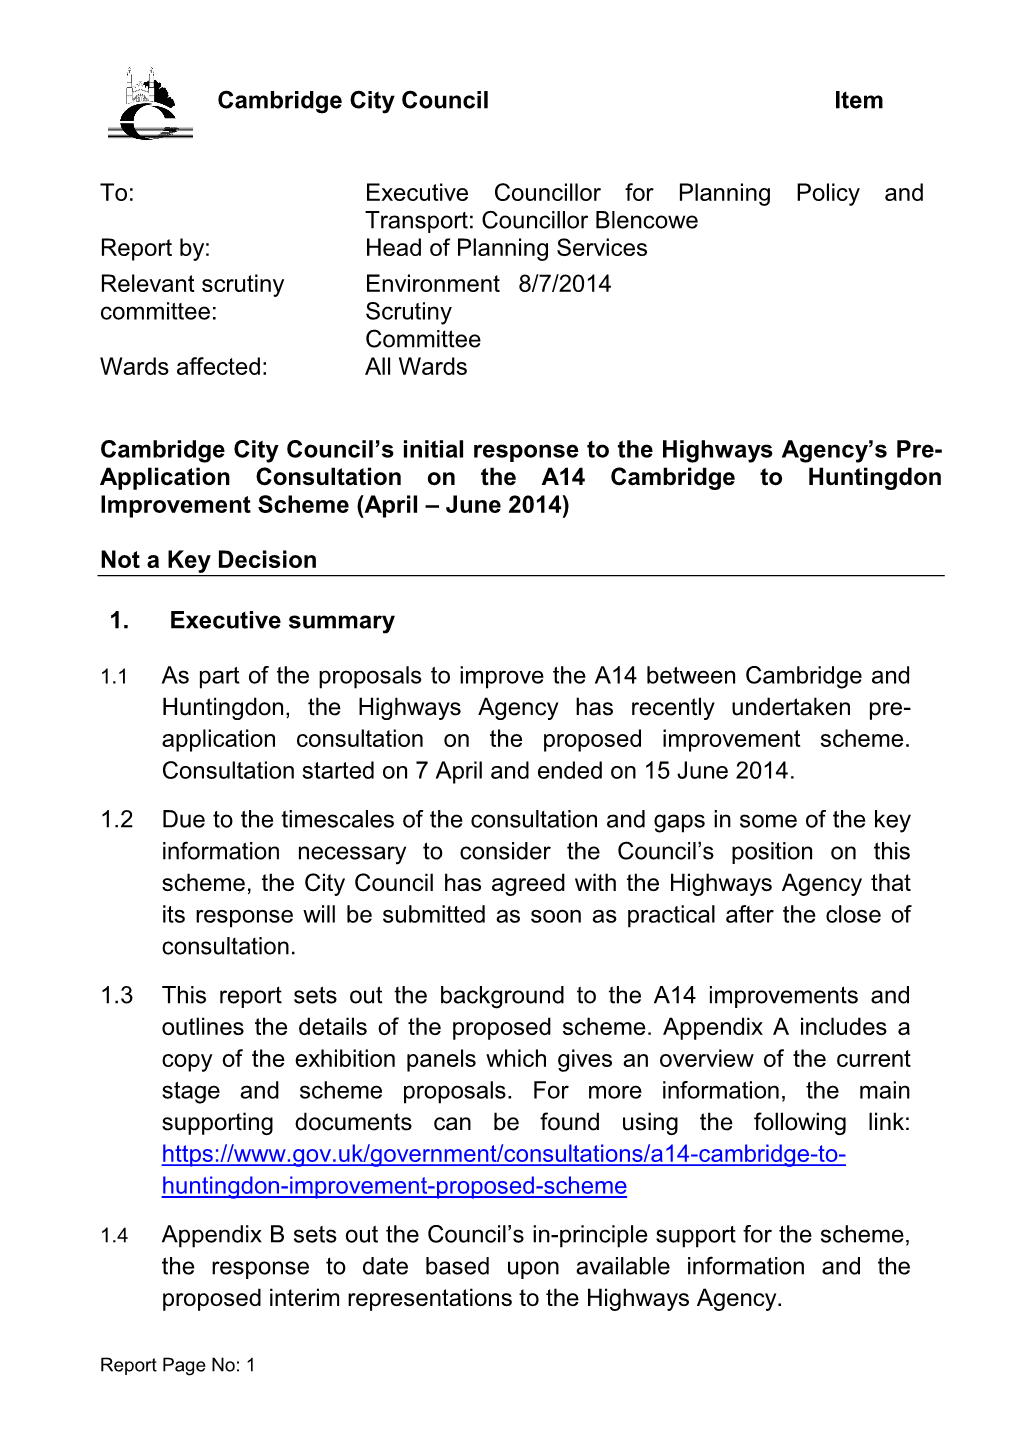 A14 Cambridge to Huntingdon Improvement Scheme (April – June 2014)